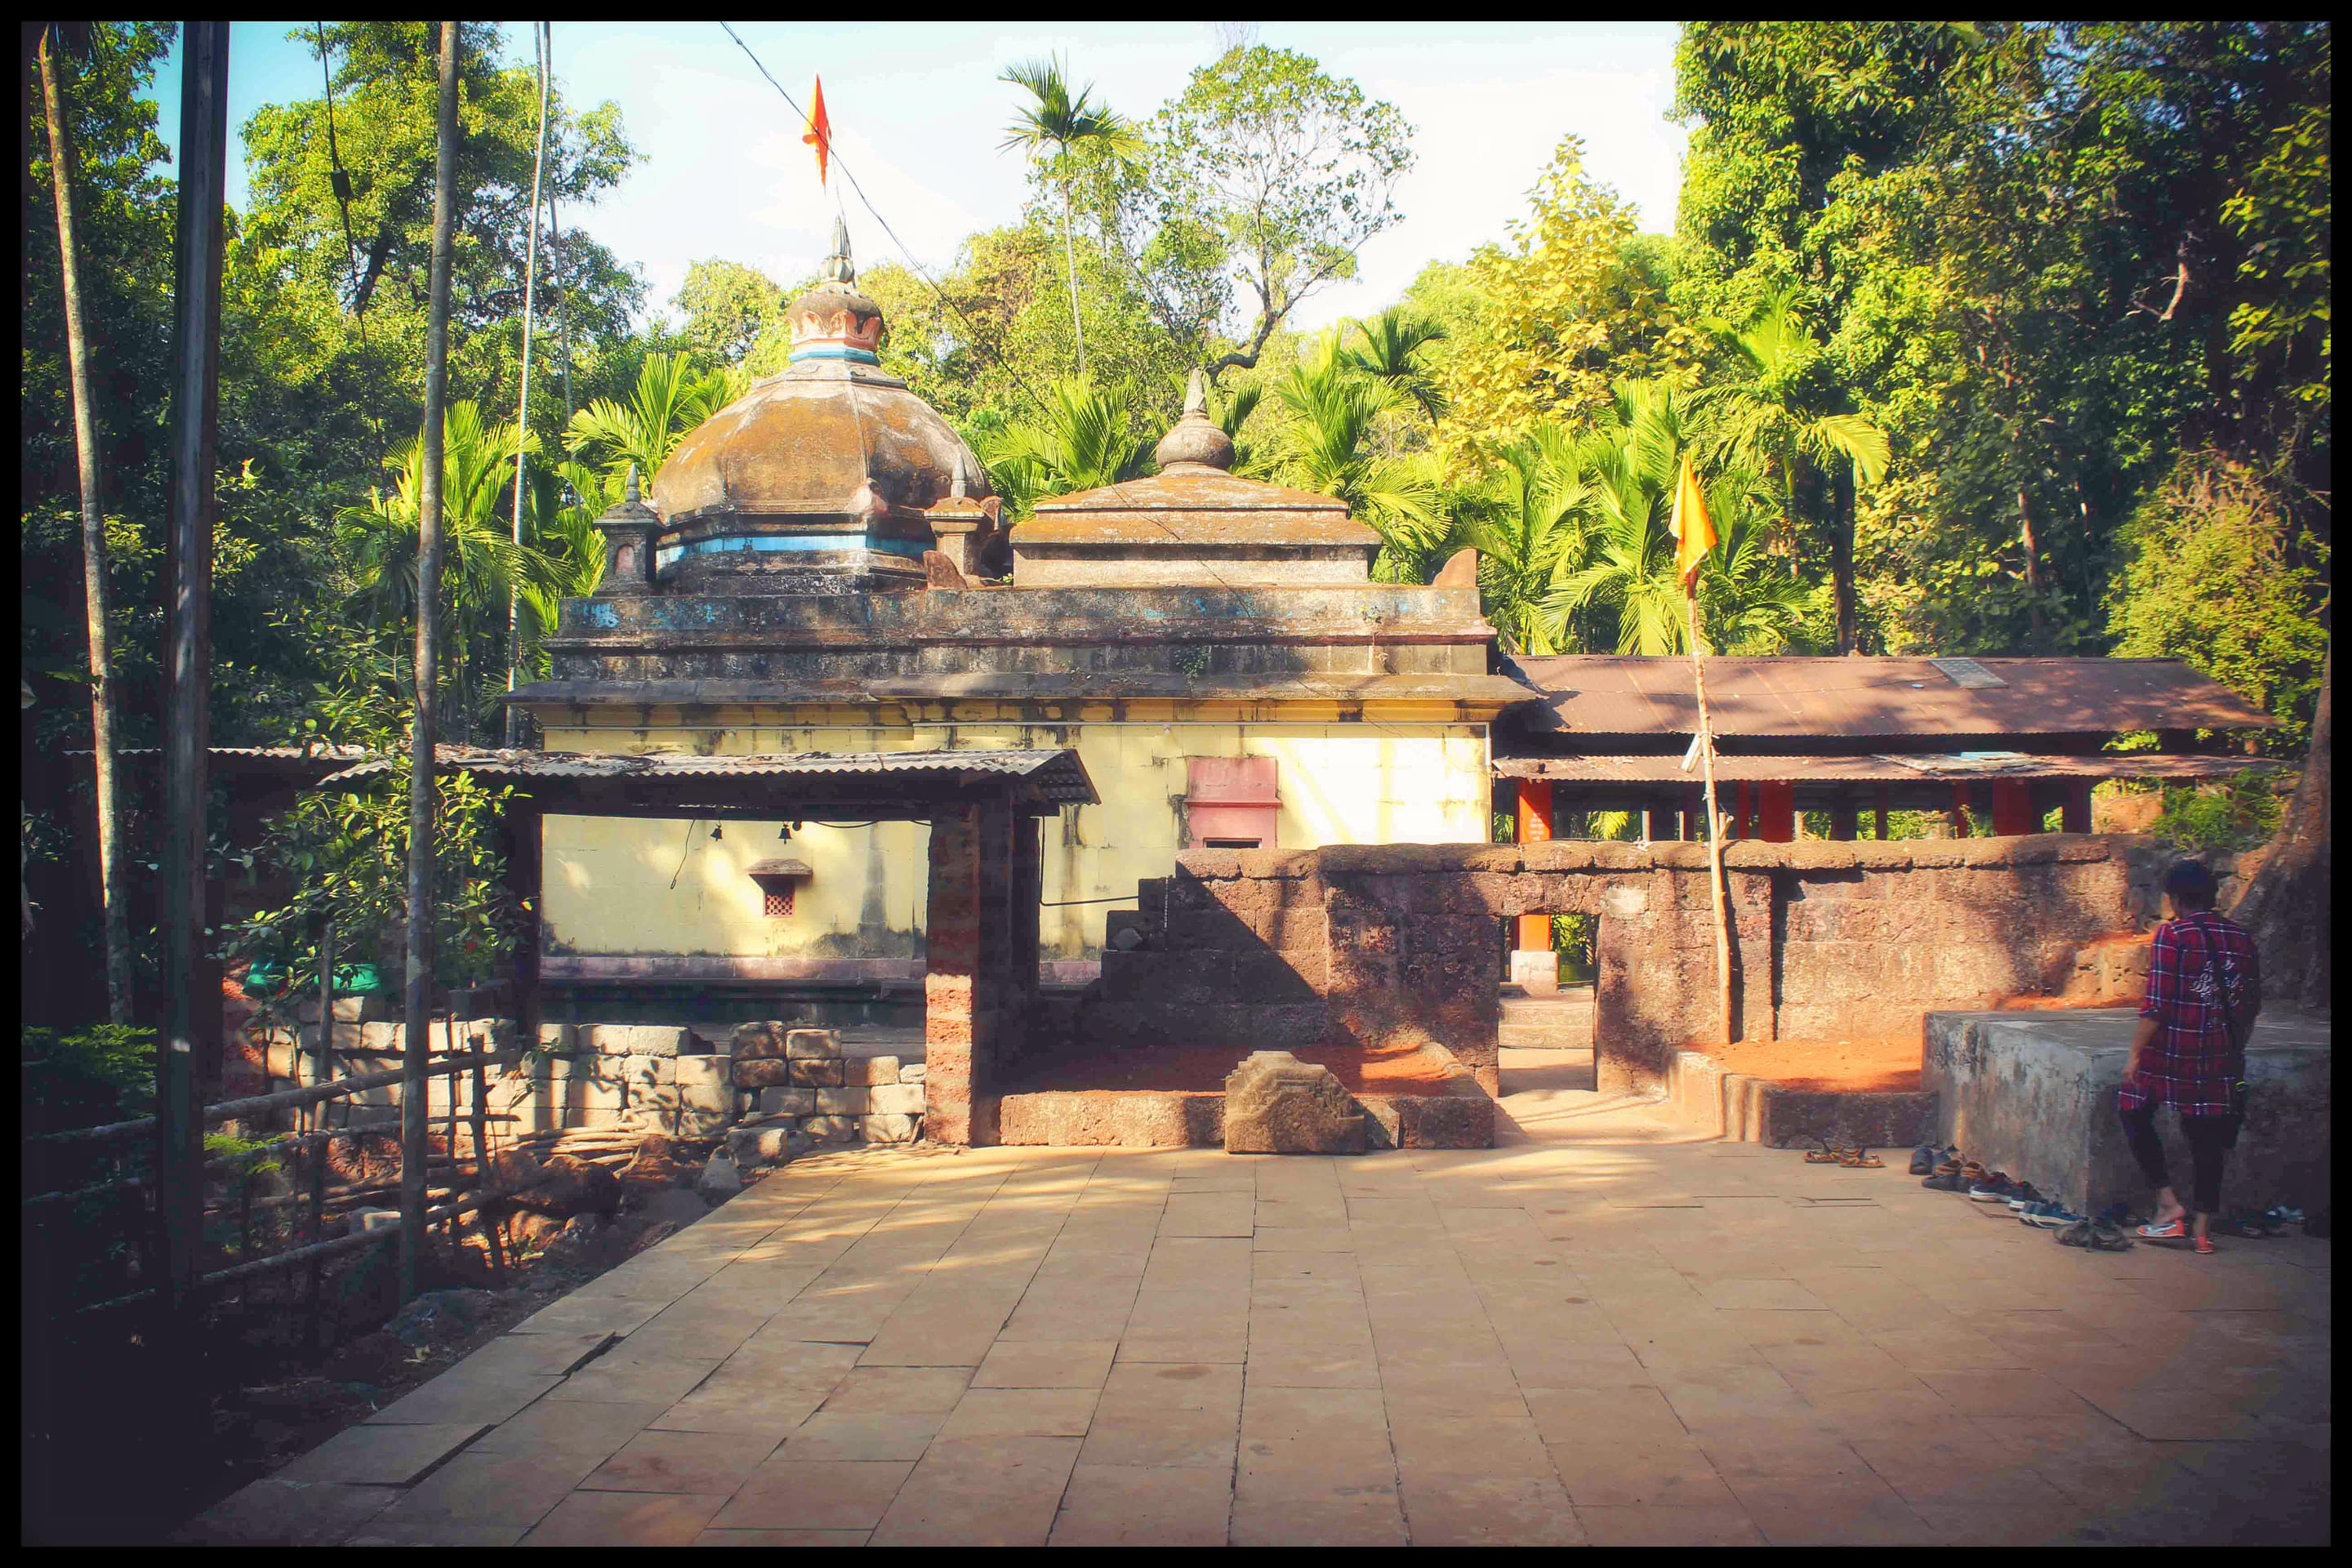 Keshavraj Temple Overview